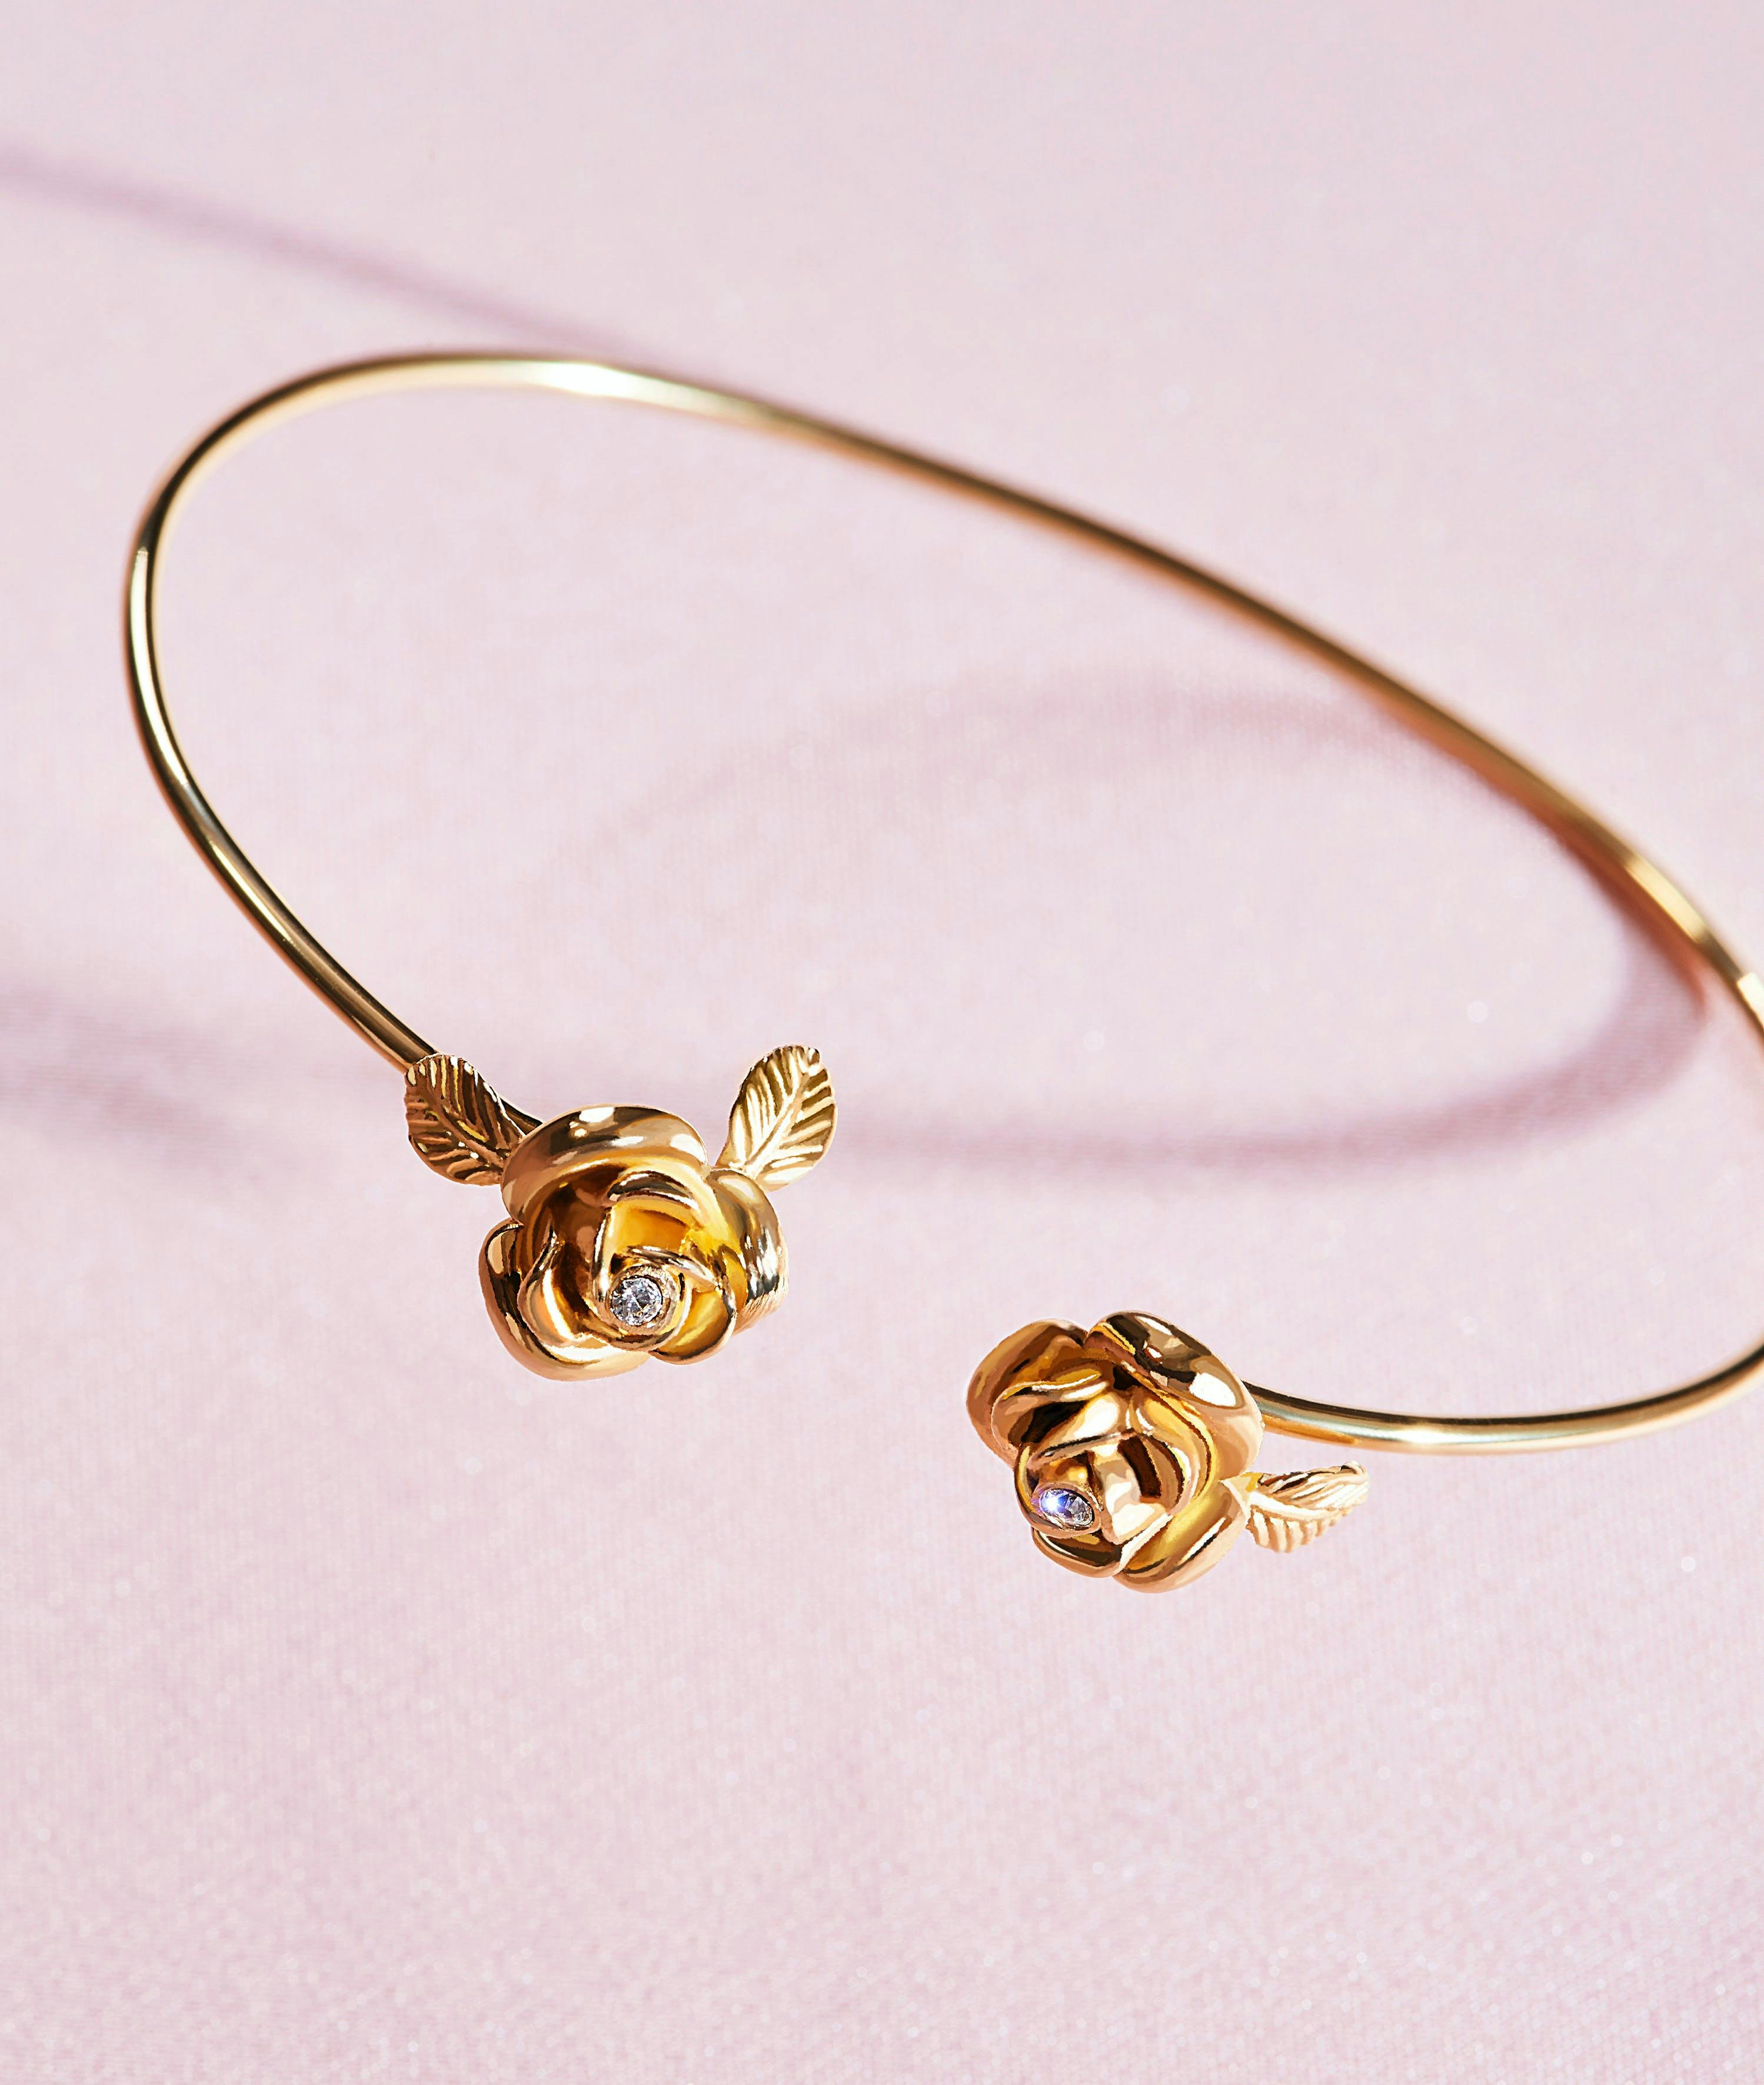 gold bracelet accessories jewelry accessory